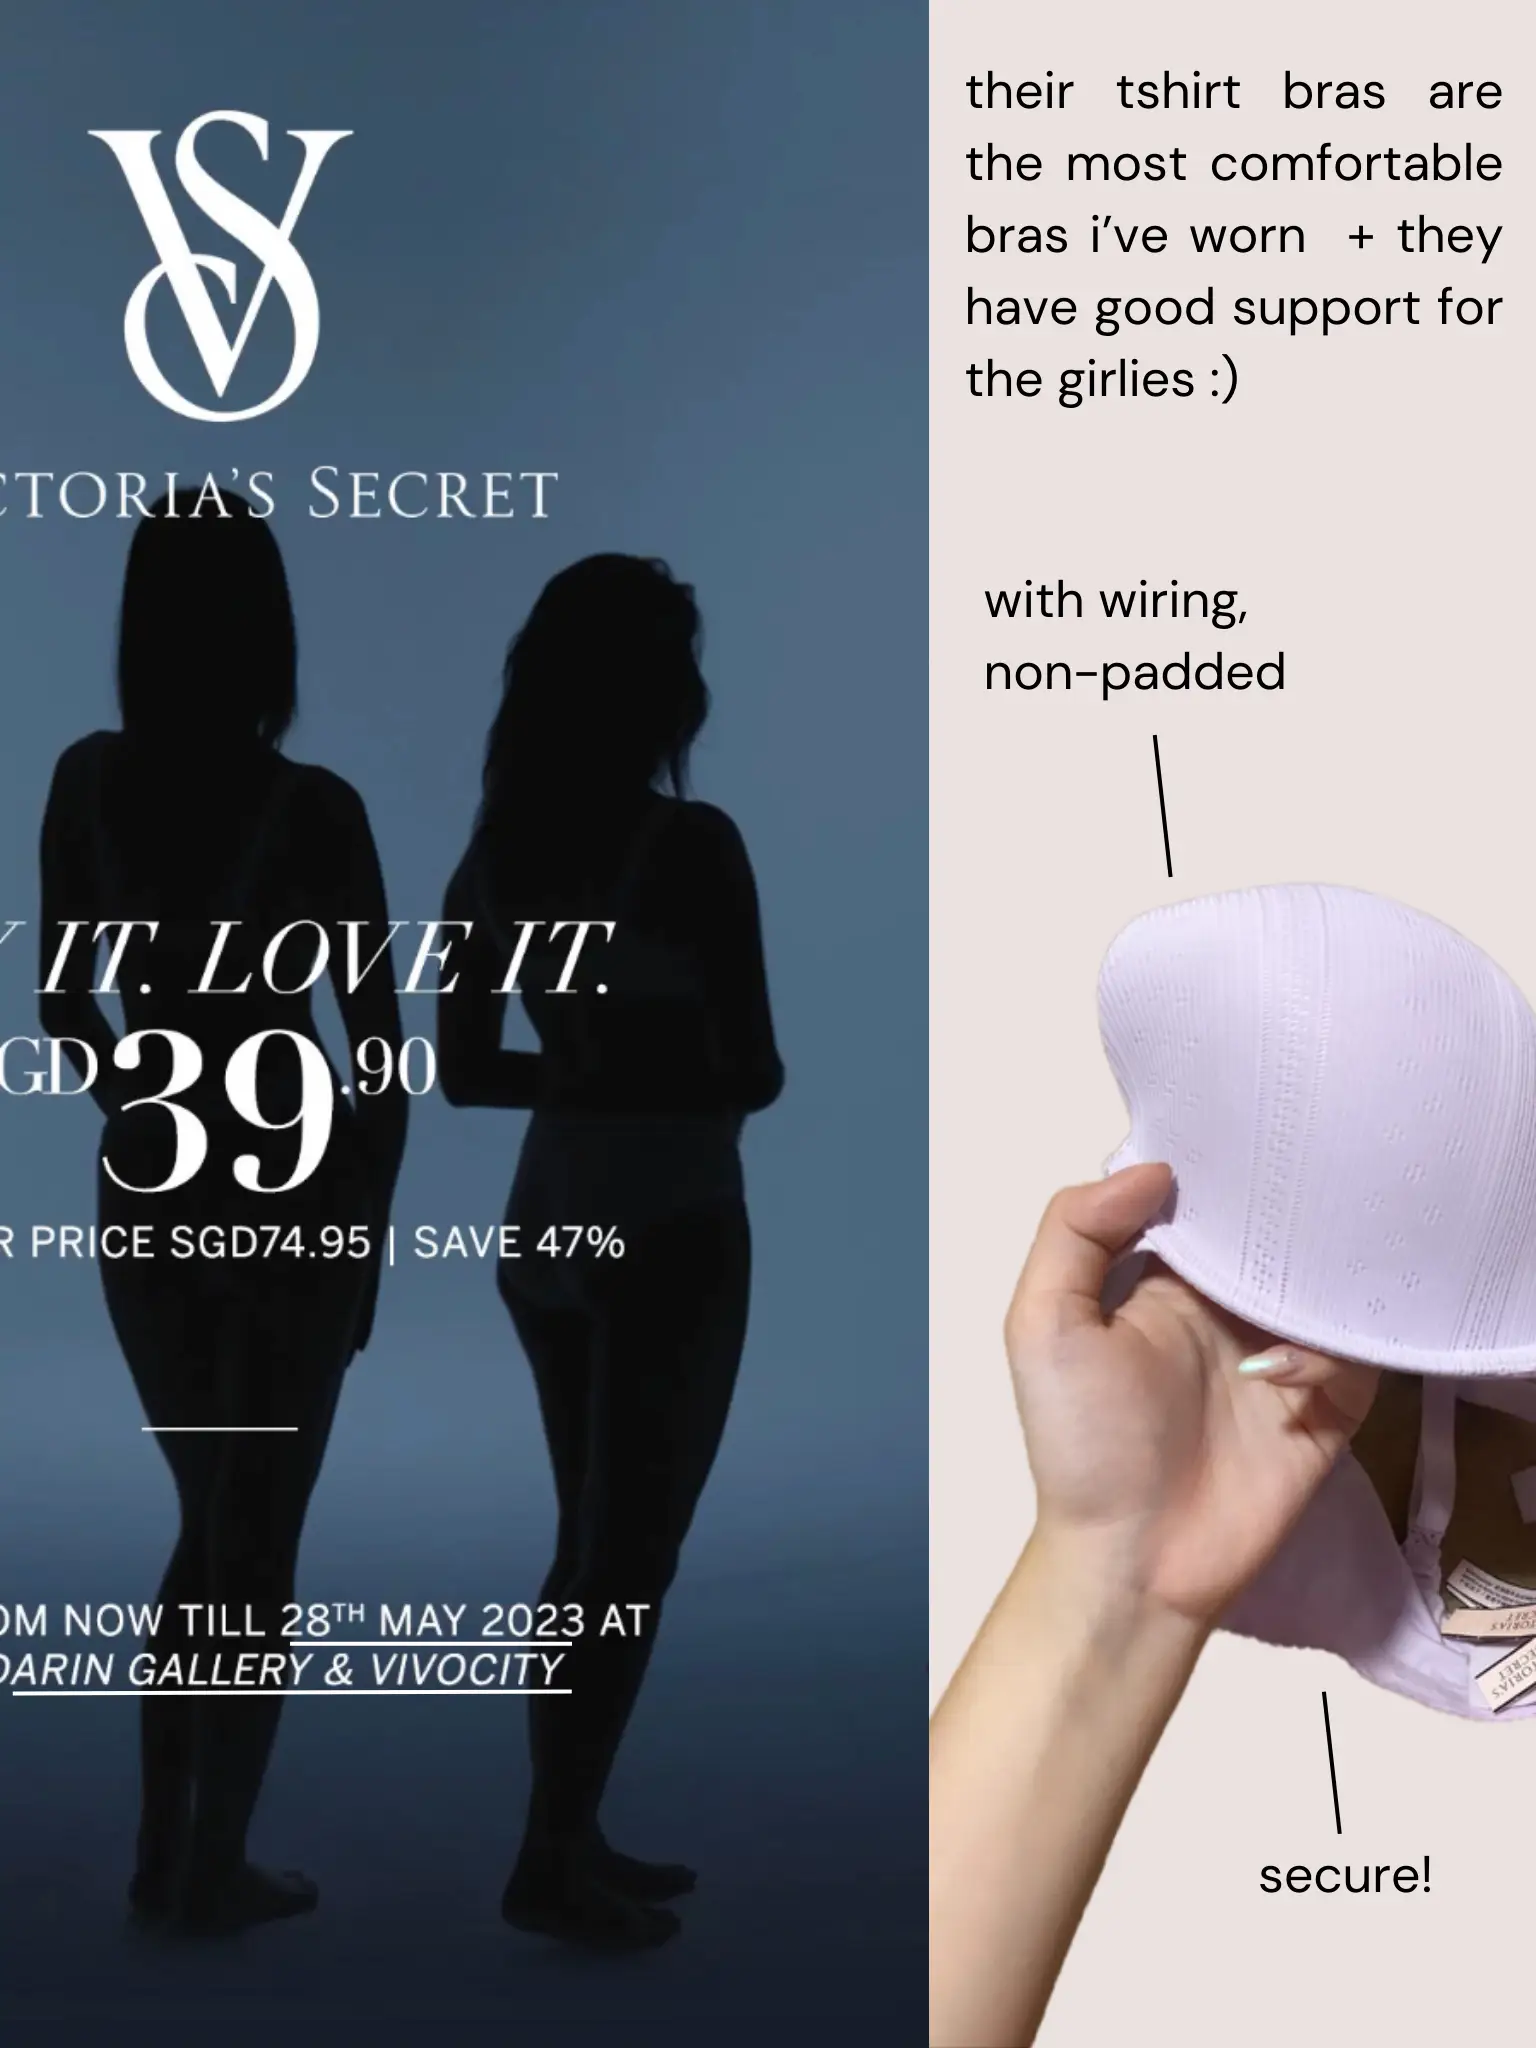 620 Victoria Secret Corset Bra Top Images, Stock Photos, 3D